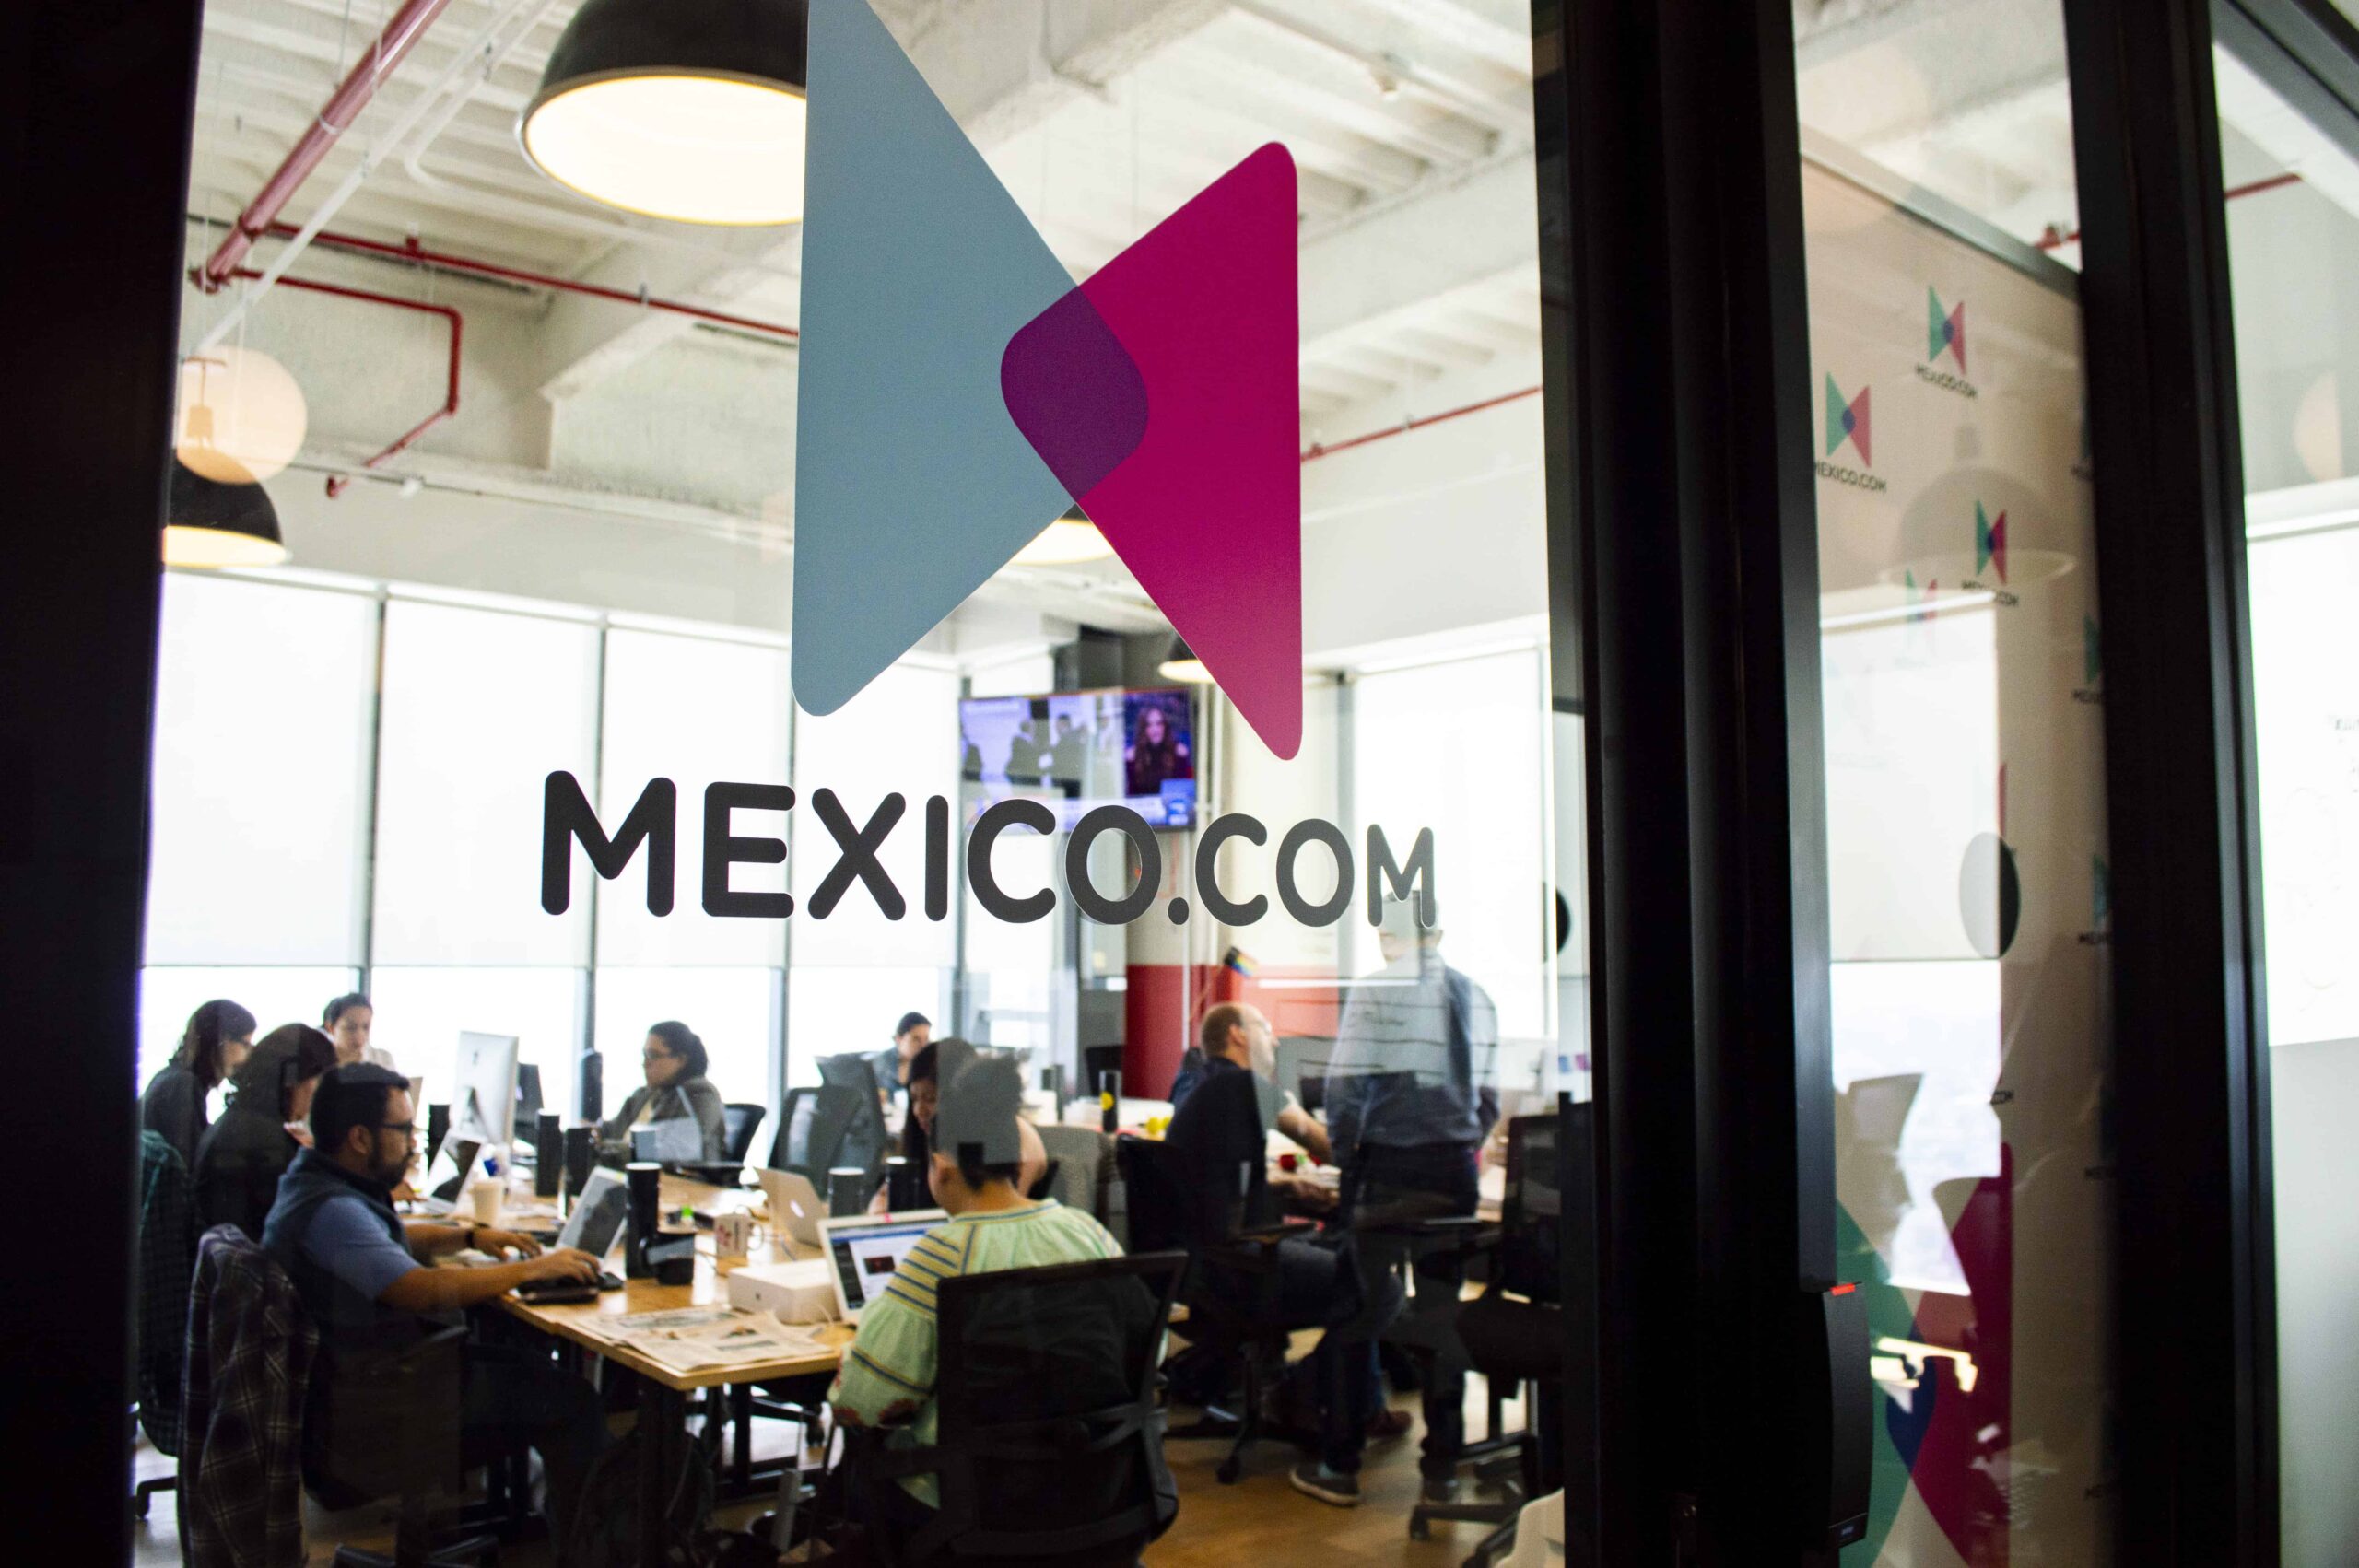 Offices of Mexico.com.